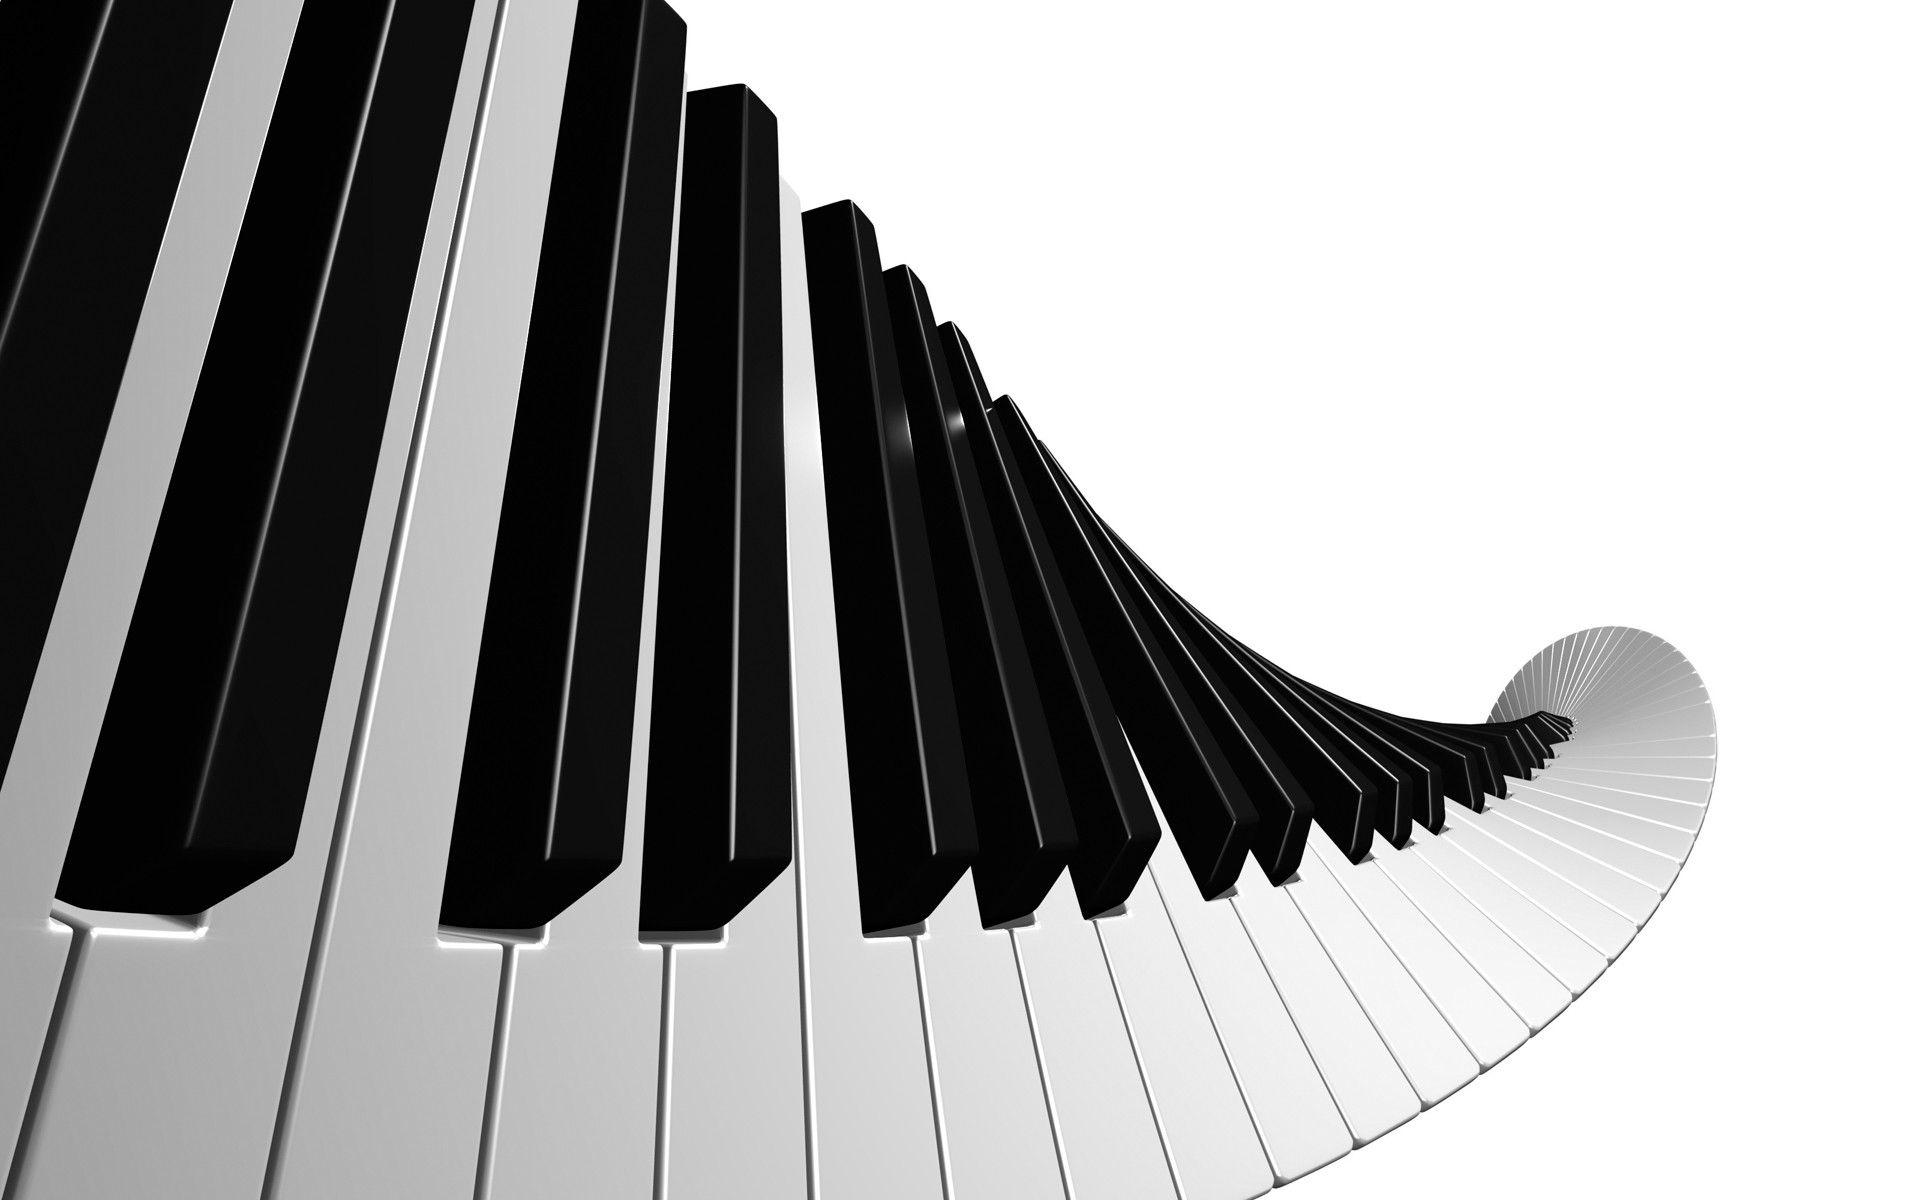 Music Wallpaper Piano 28272 HD Wallpaper in Music